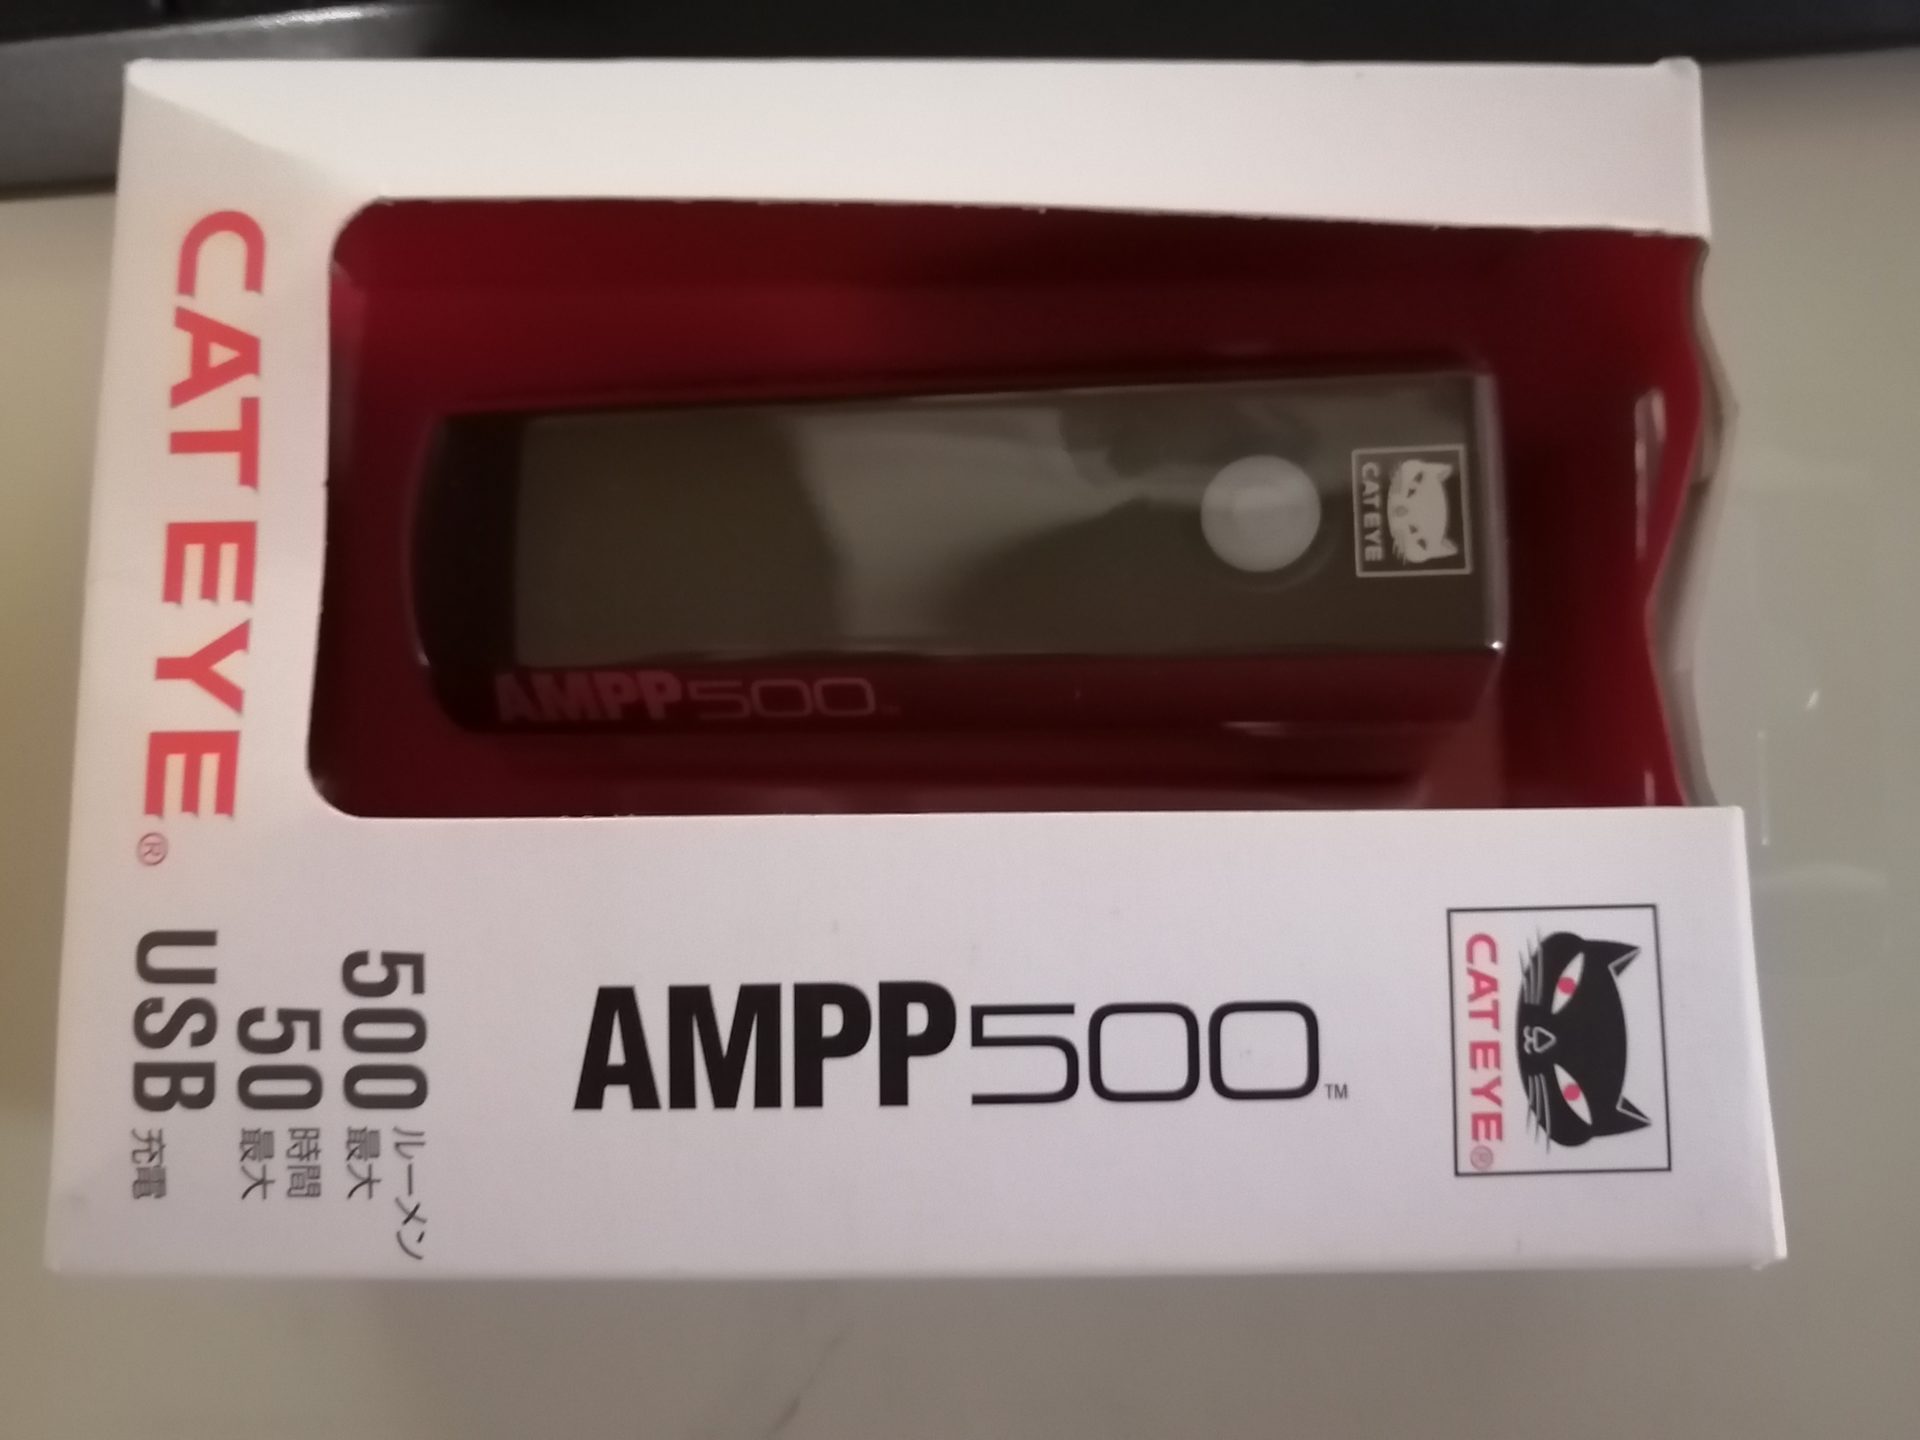 ampp500